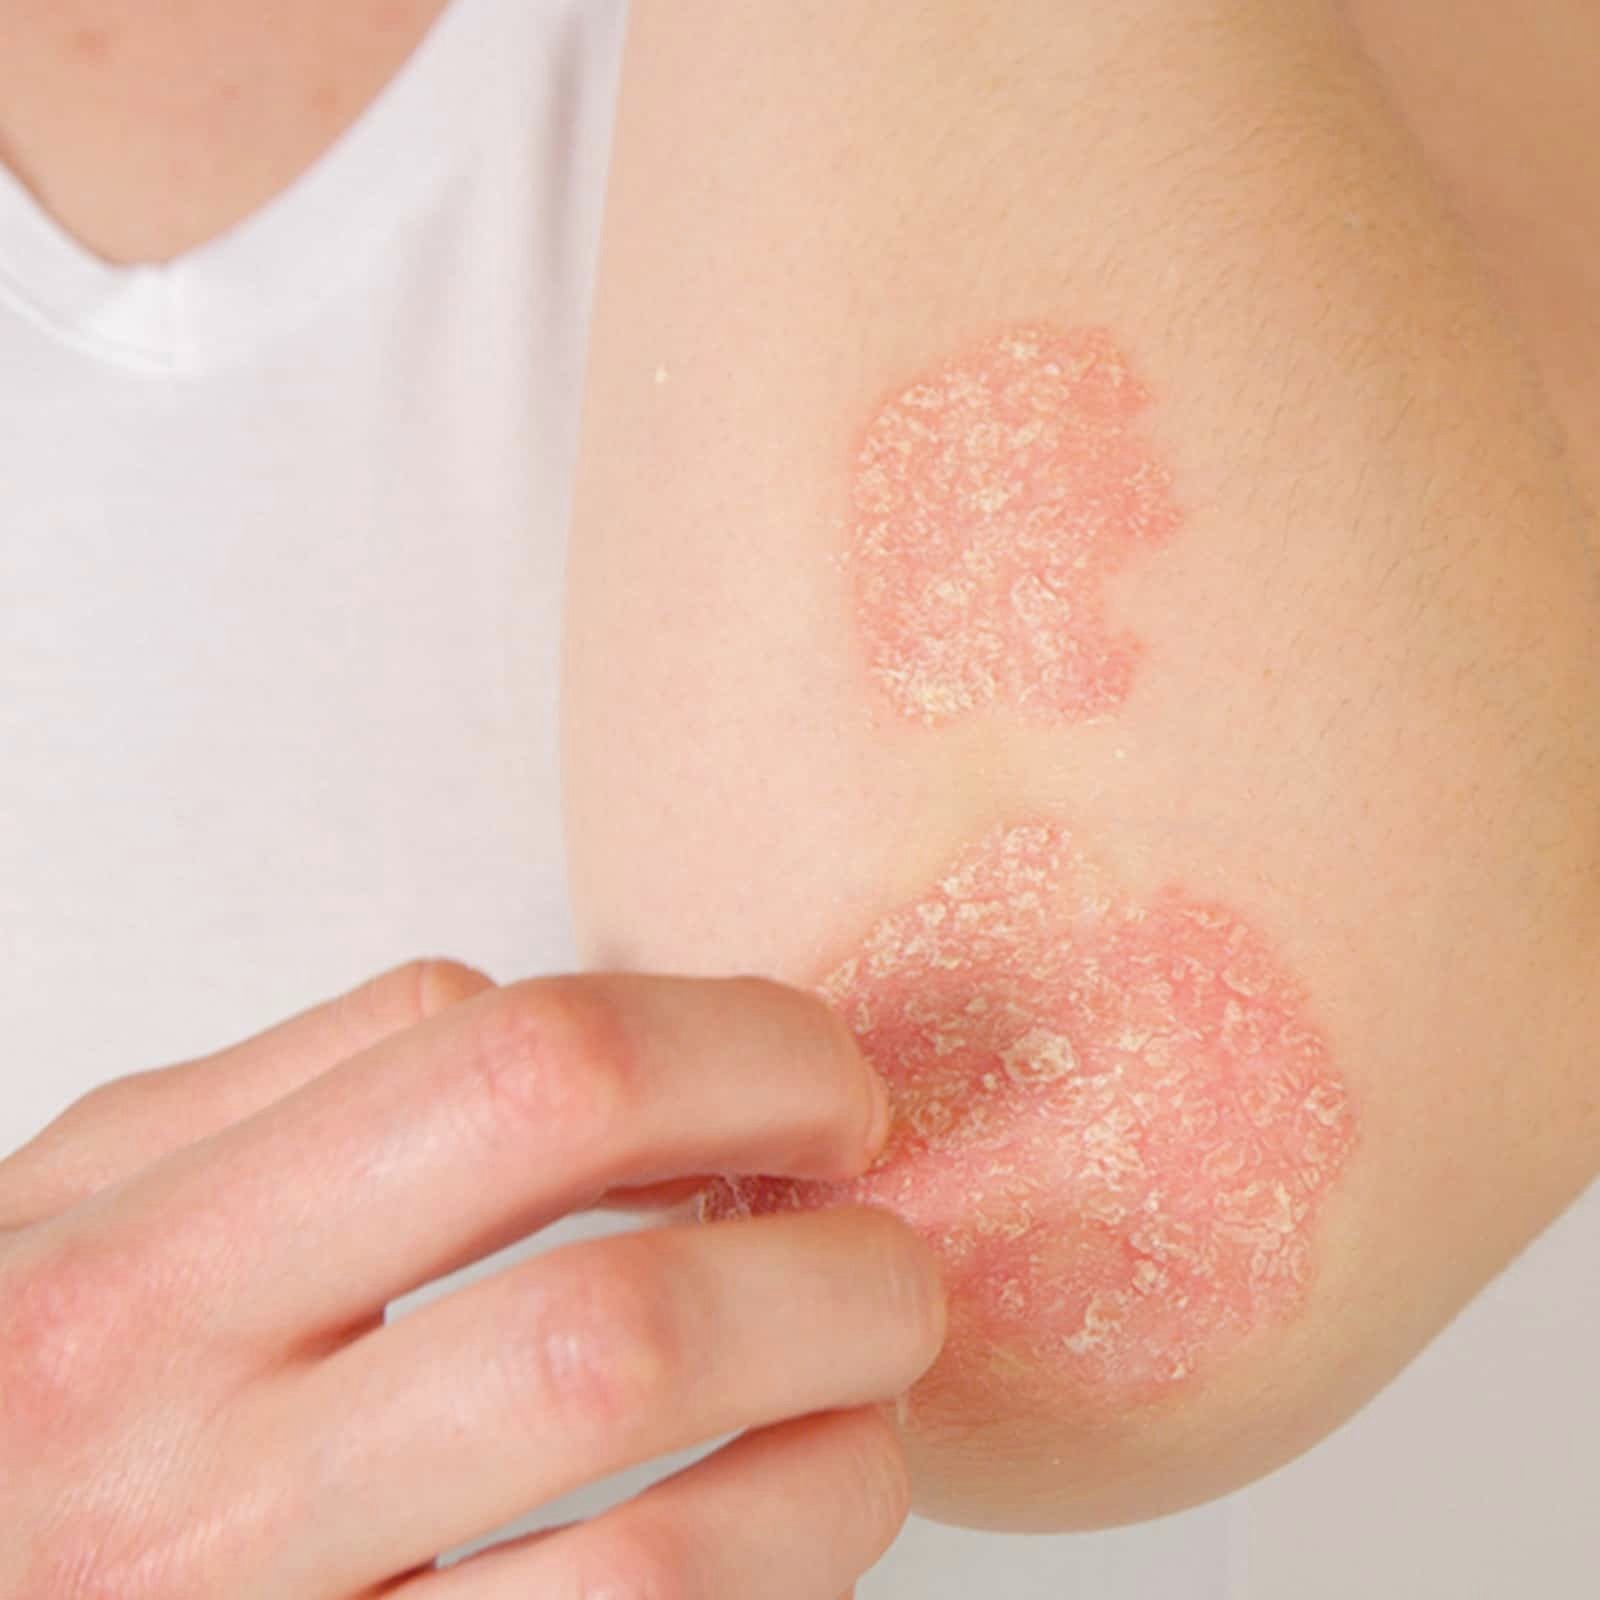 Common Skin Disease featured